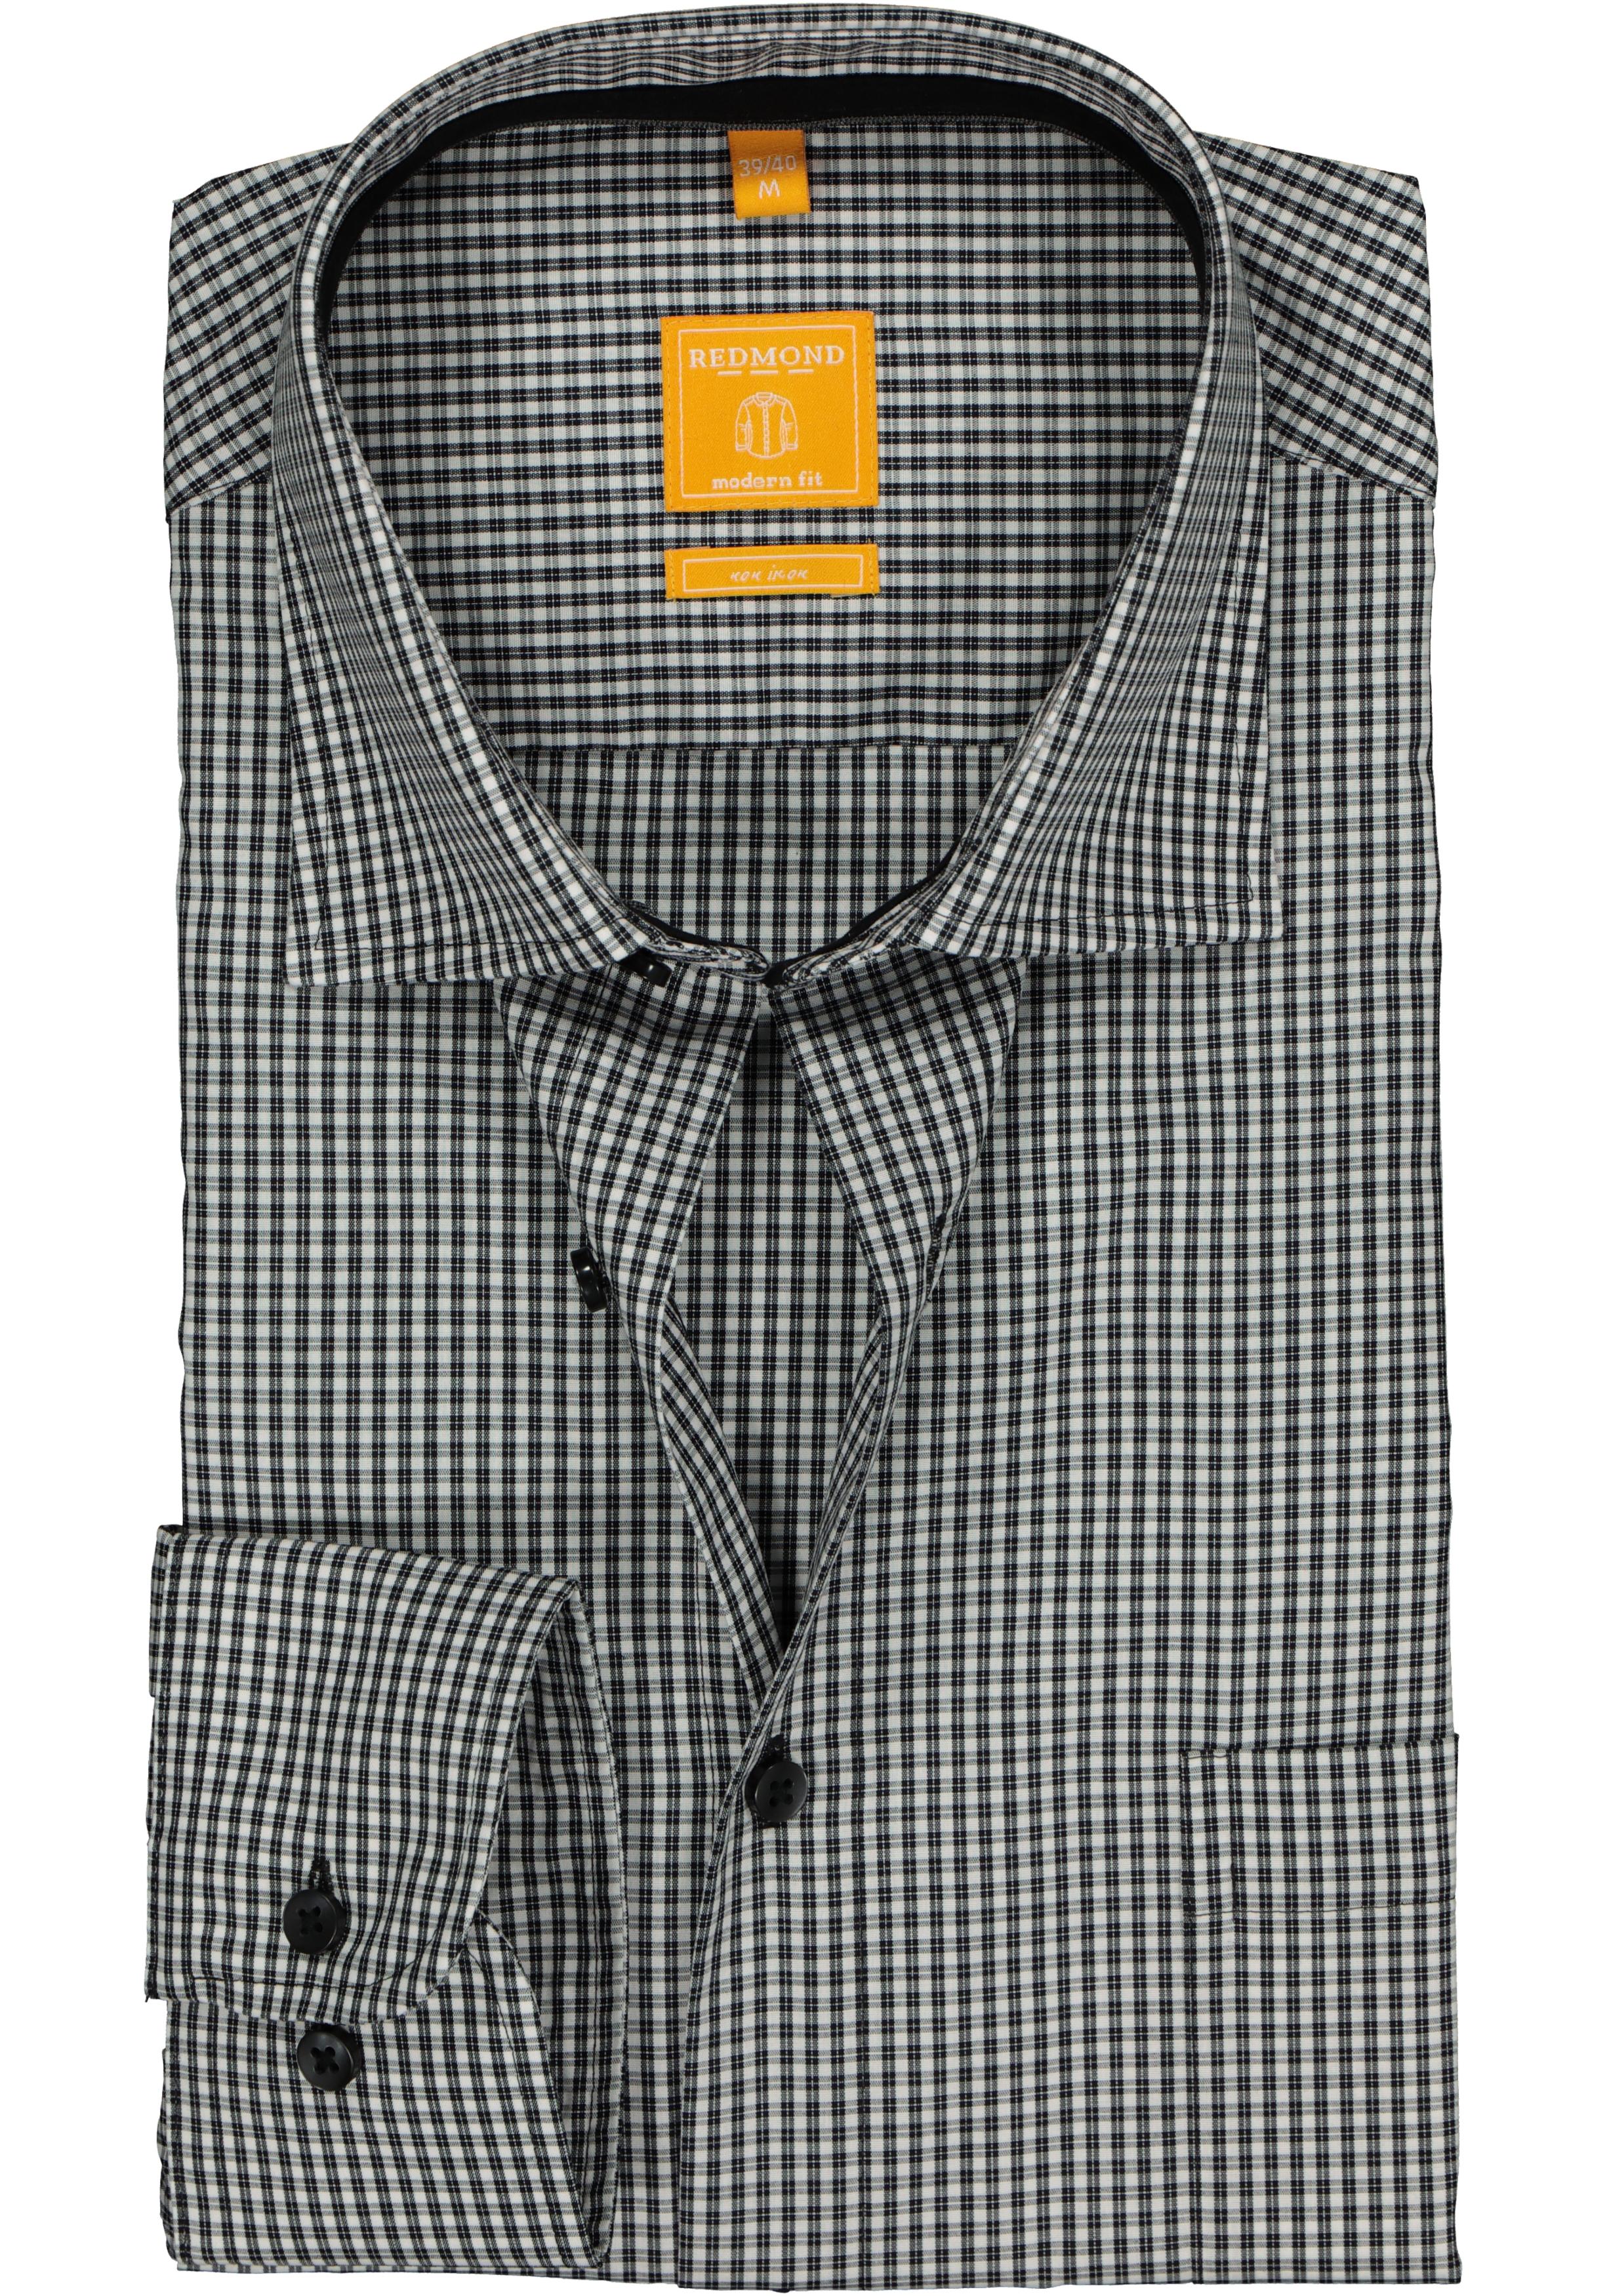 modern fit overhemd, zwart-wit geruit (contrast) - Zomer SALE 50% korting